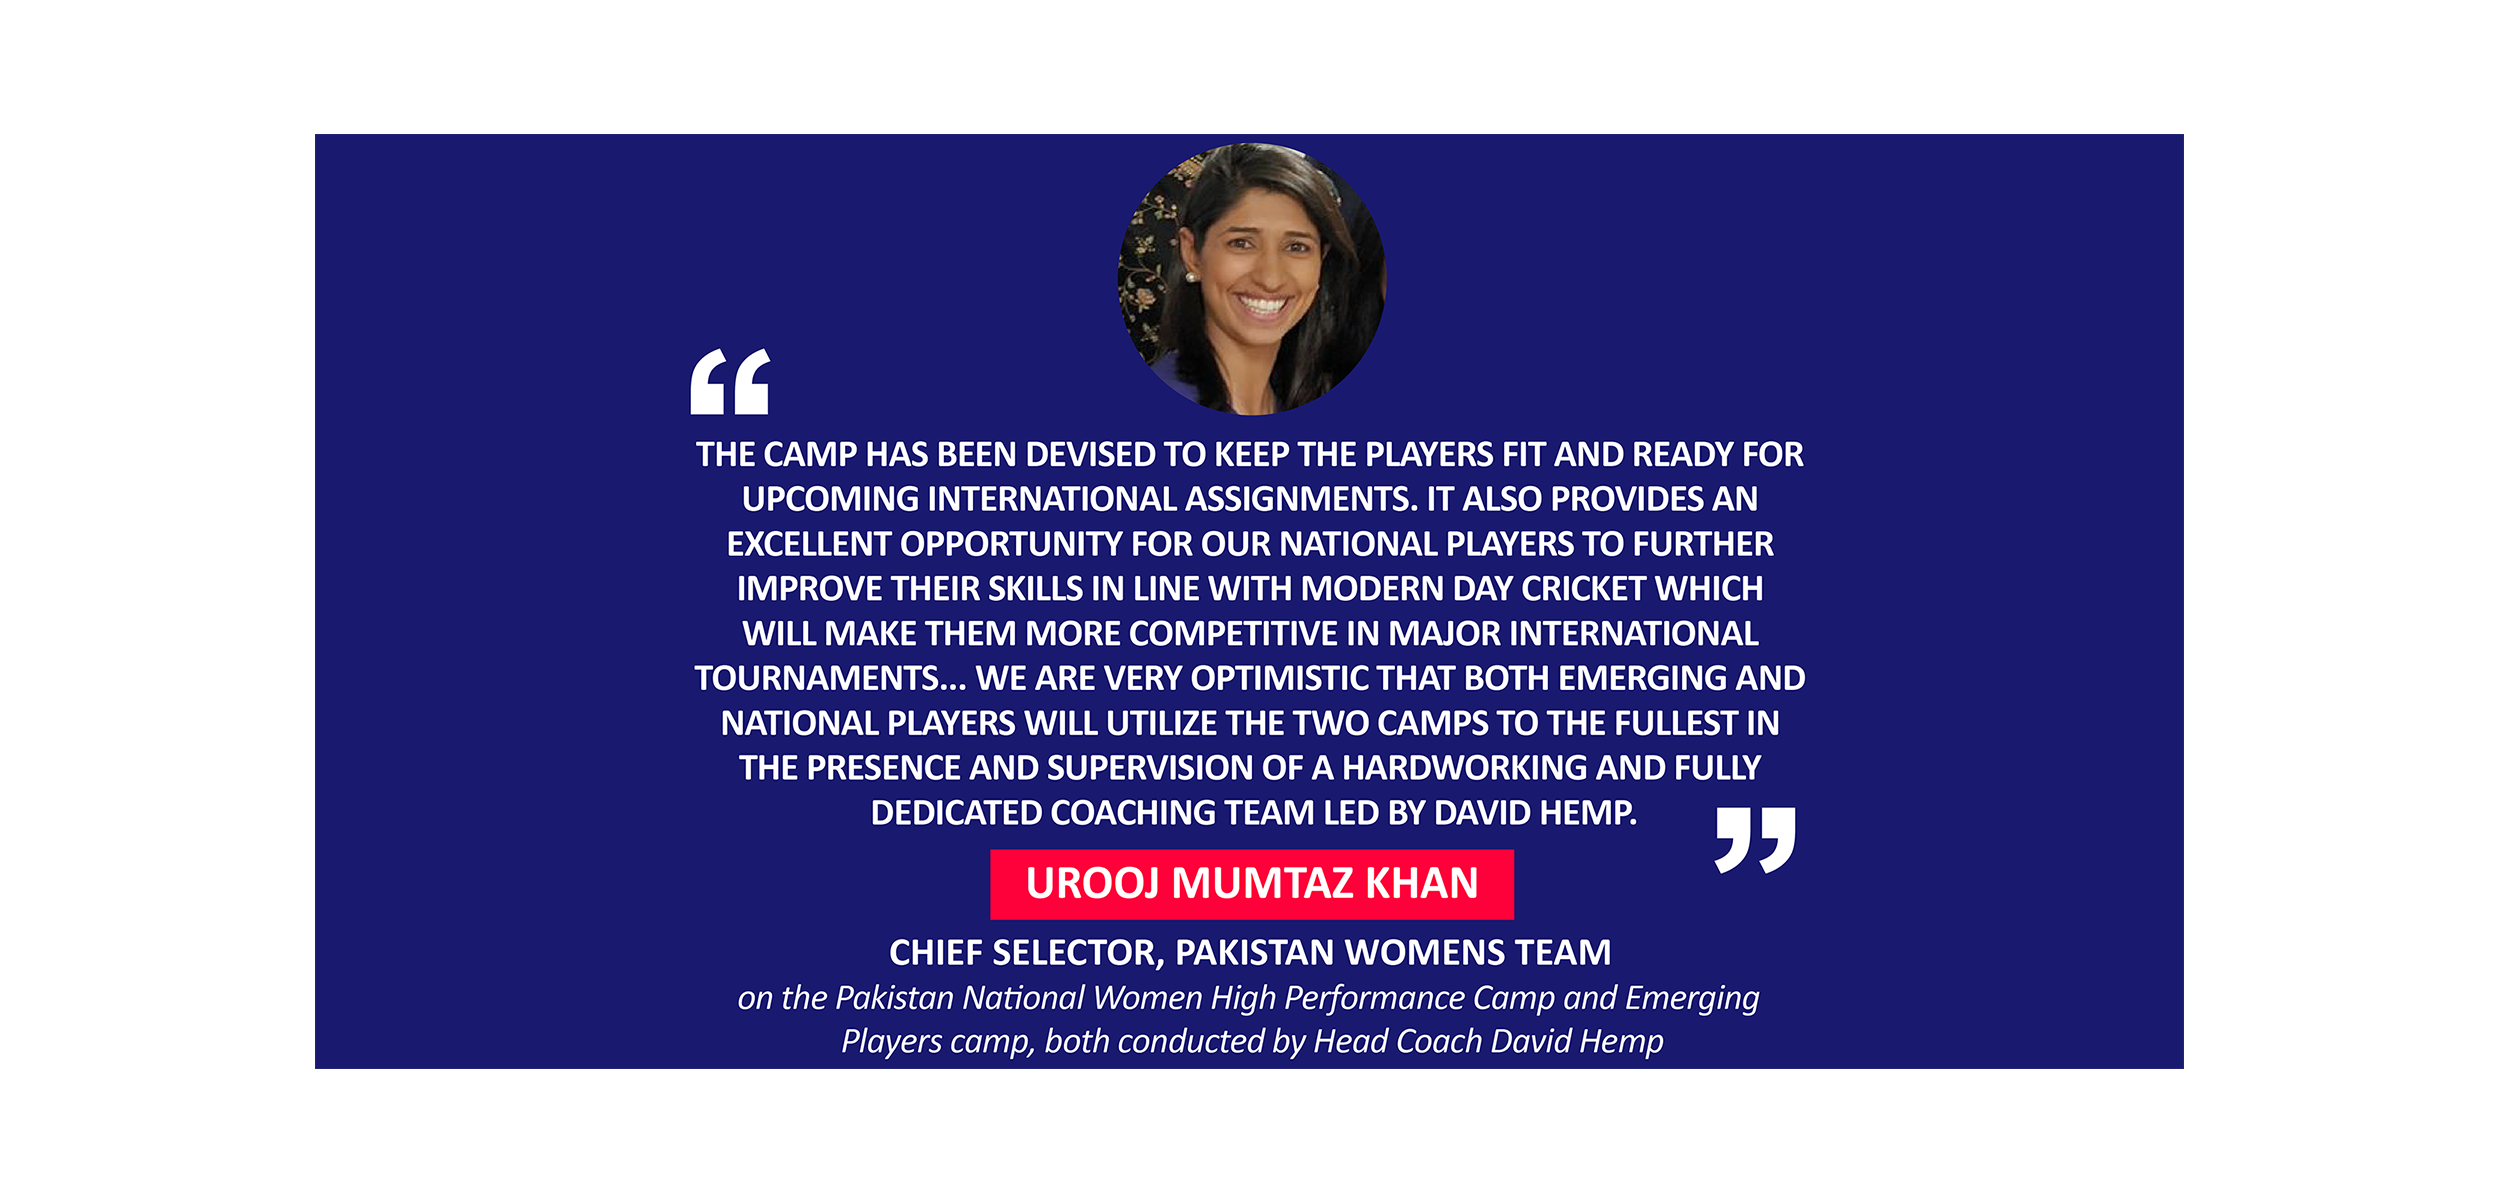 Urooj Mumtaz Khan, Chief Selector, Pakistan Womens Team on the Pakistan National Women High Performance Camp and Emerging Players camp, both conducted by Head Coach David Hemp